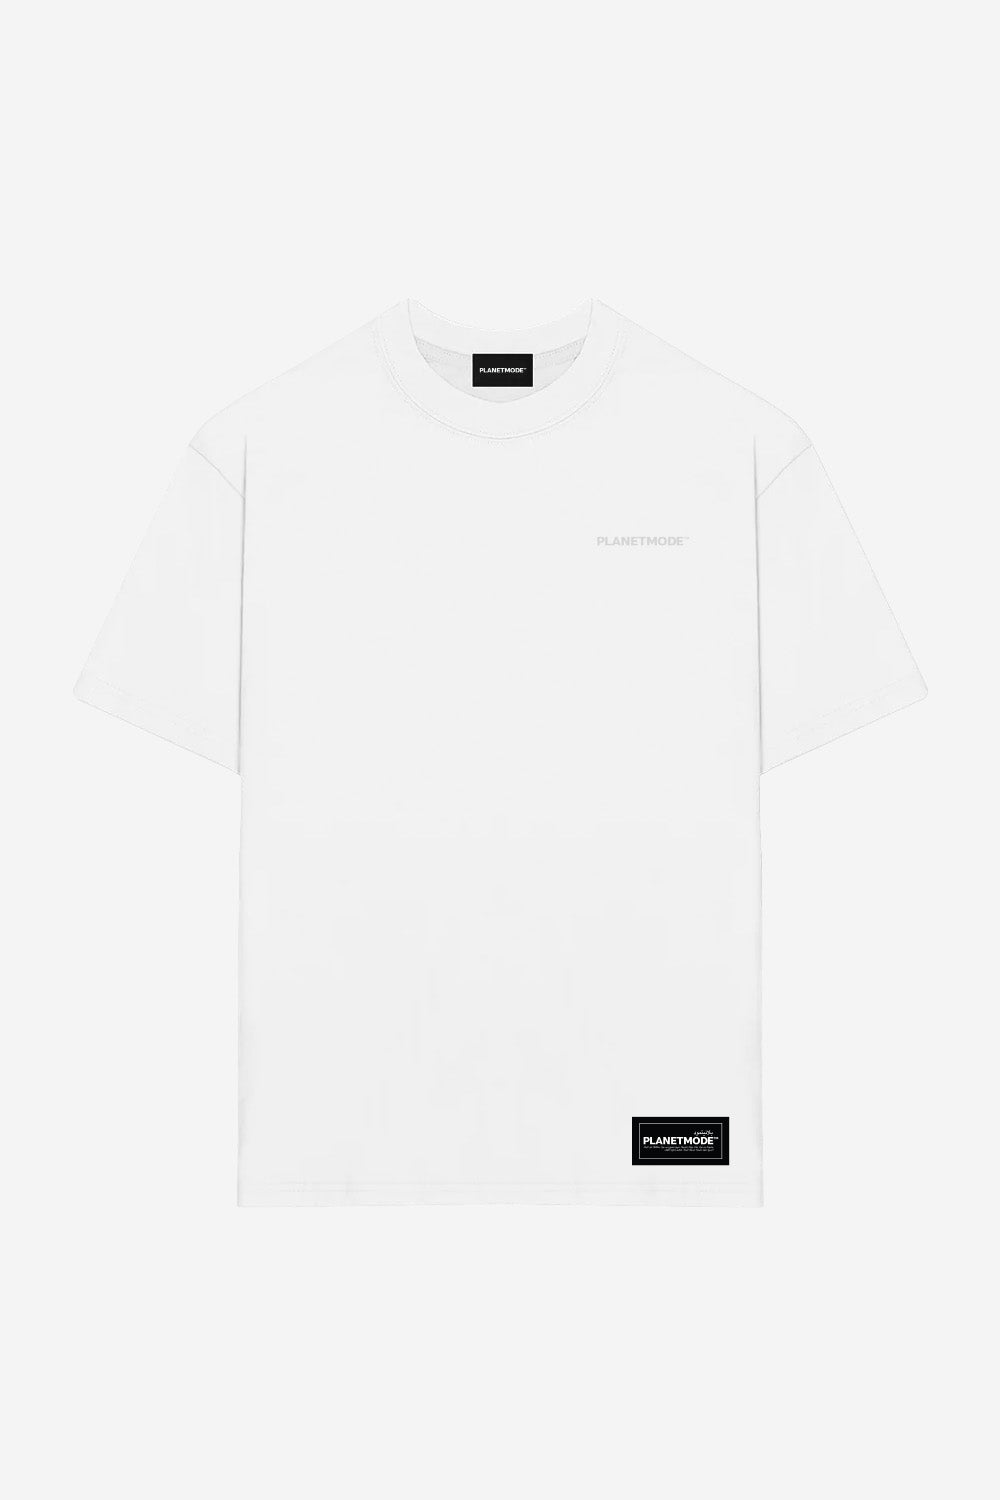 100% Cotton Tee Shirt S/SS23 White – PLANETMODE بلانيتمود